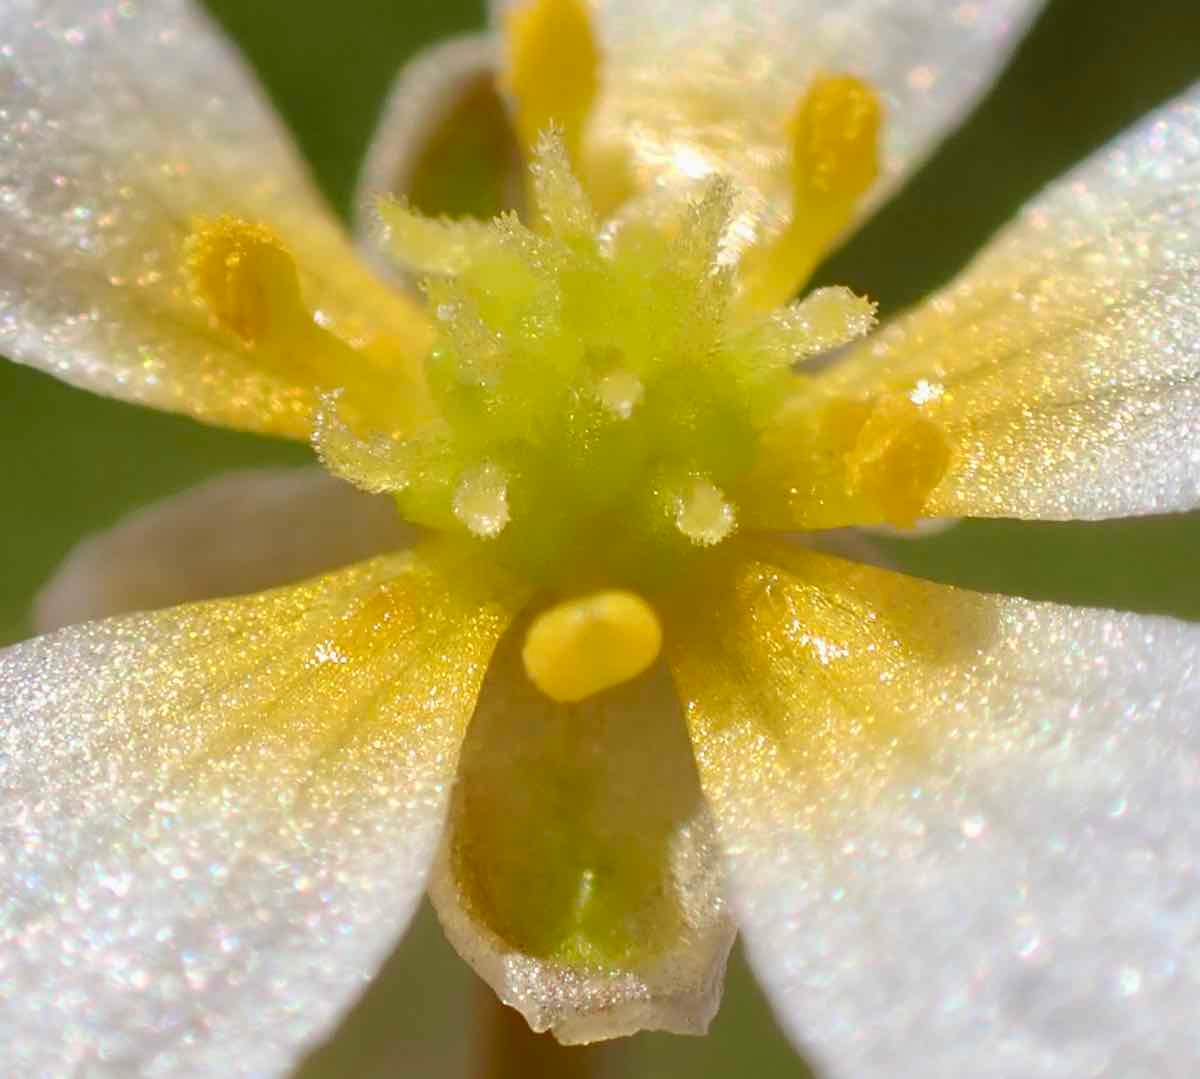 Ranunculus aquatilis var. diffusus